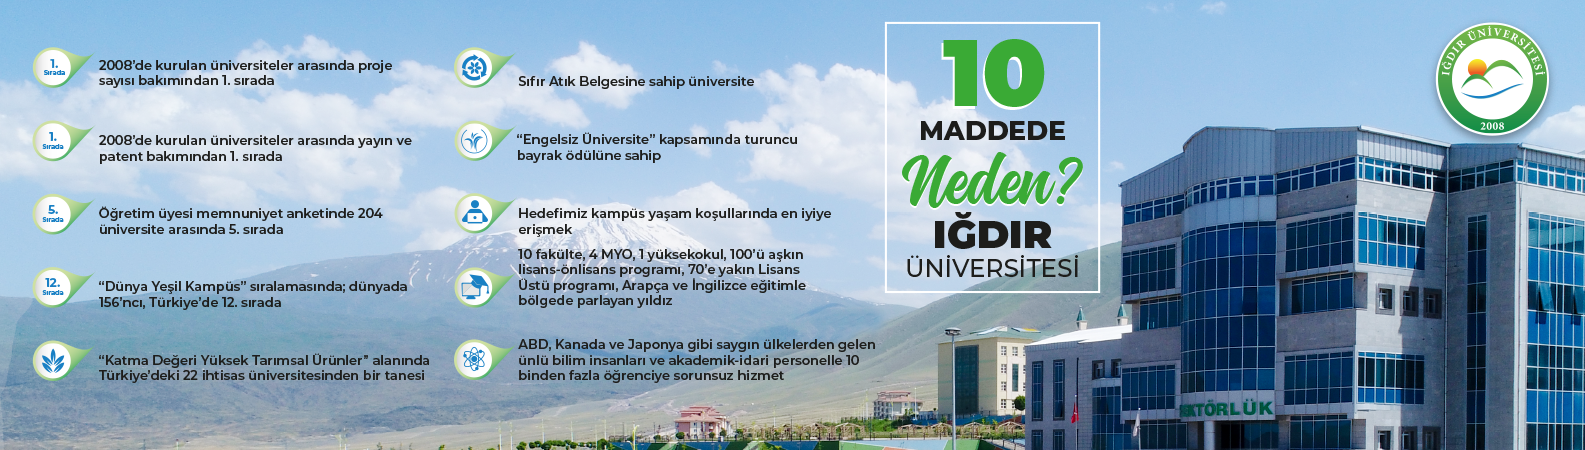 10-maddede-igdir-universitesi-banner-e.png